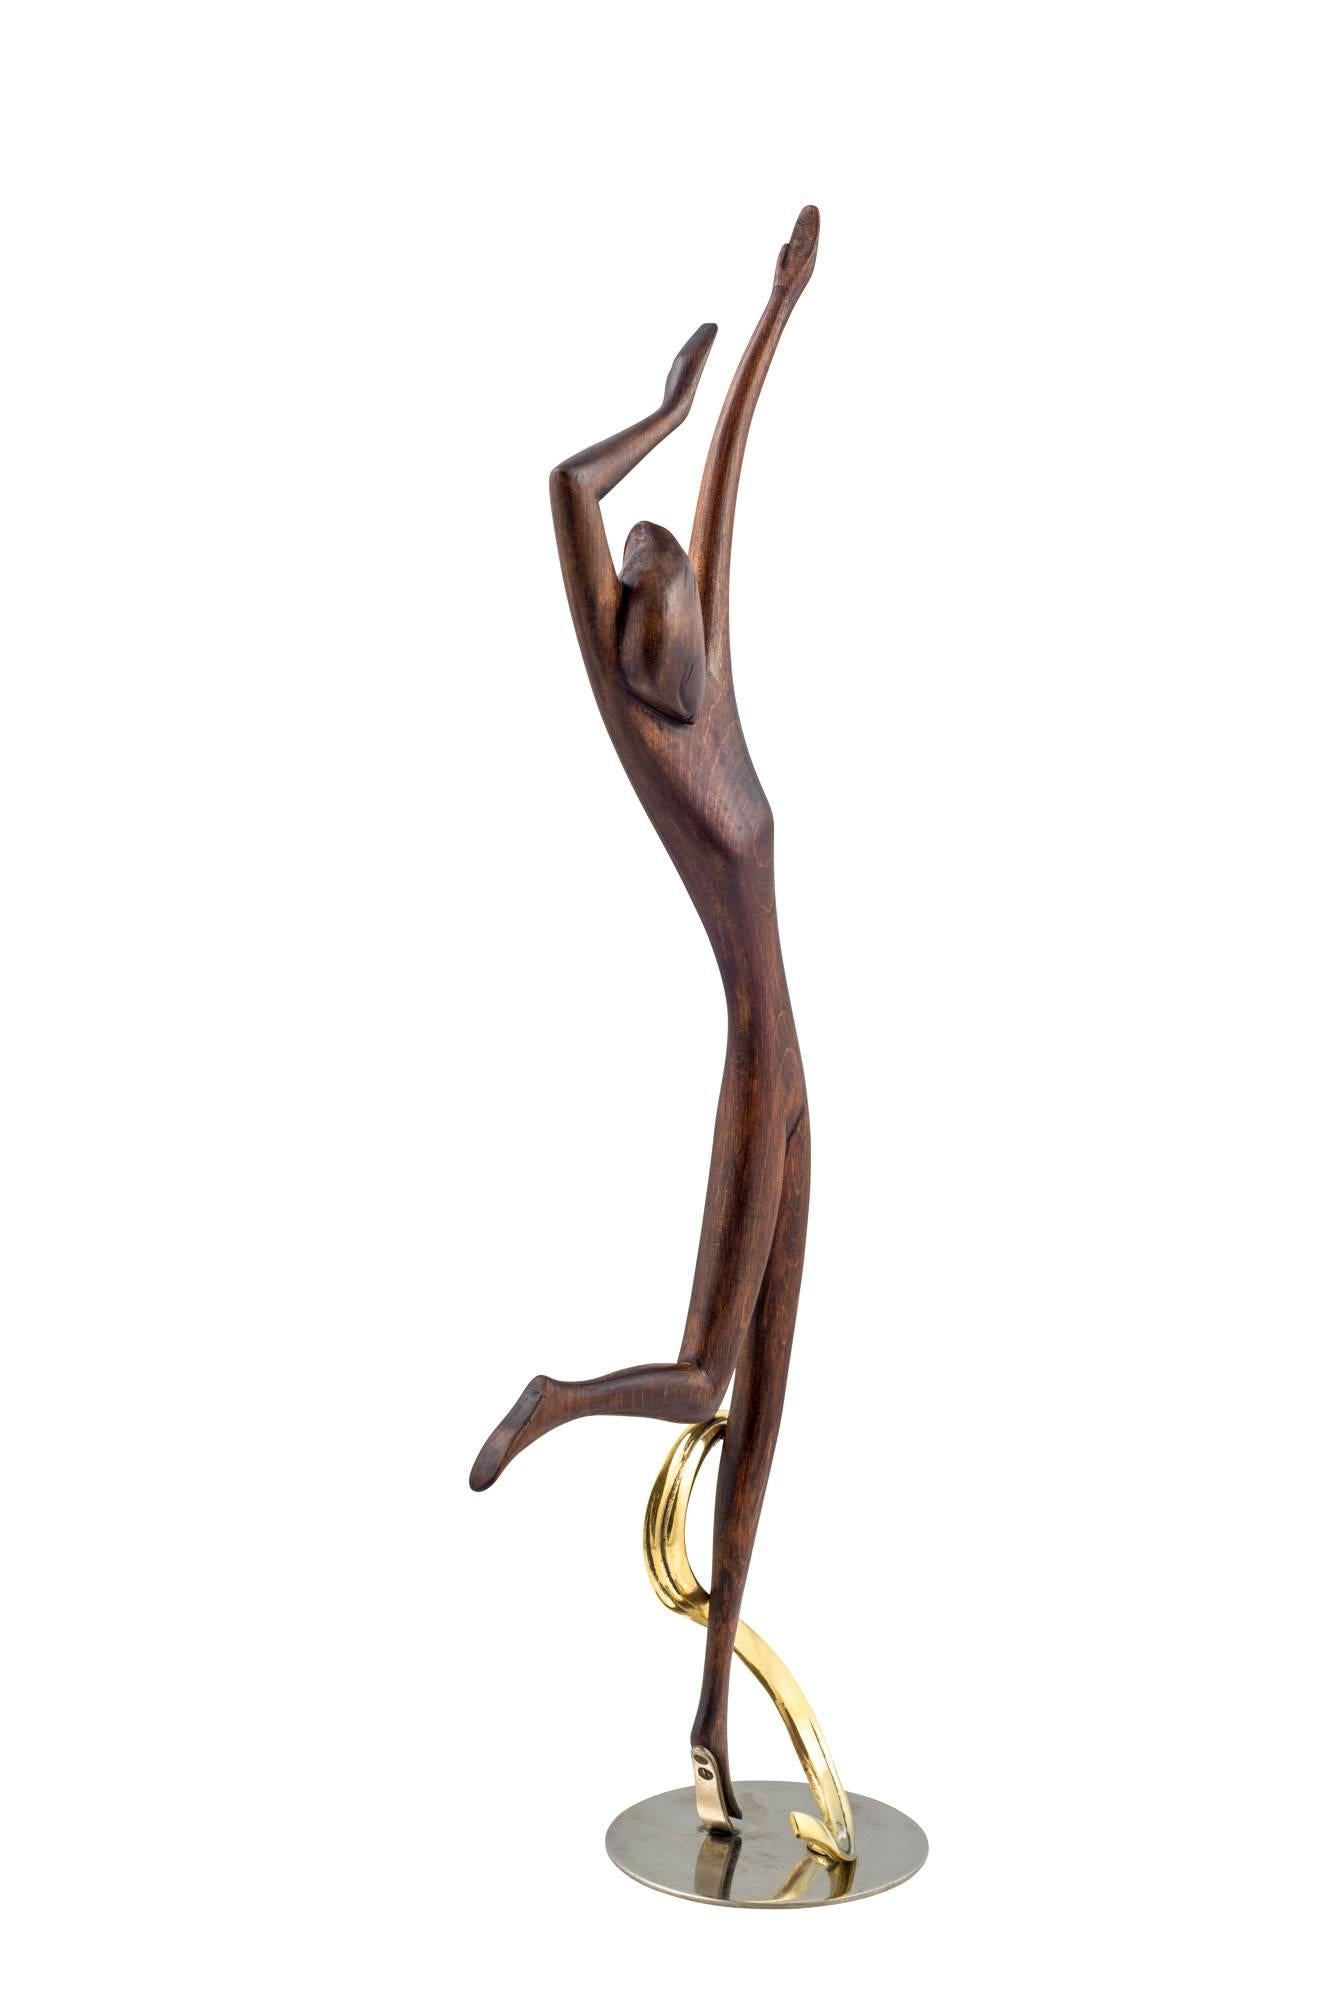 Austrian Hagenauer Dancer 1950s Brass Nickel-Plated Precious Wood Leopold Collection